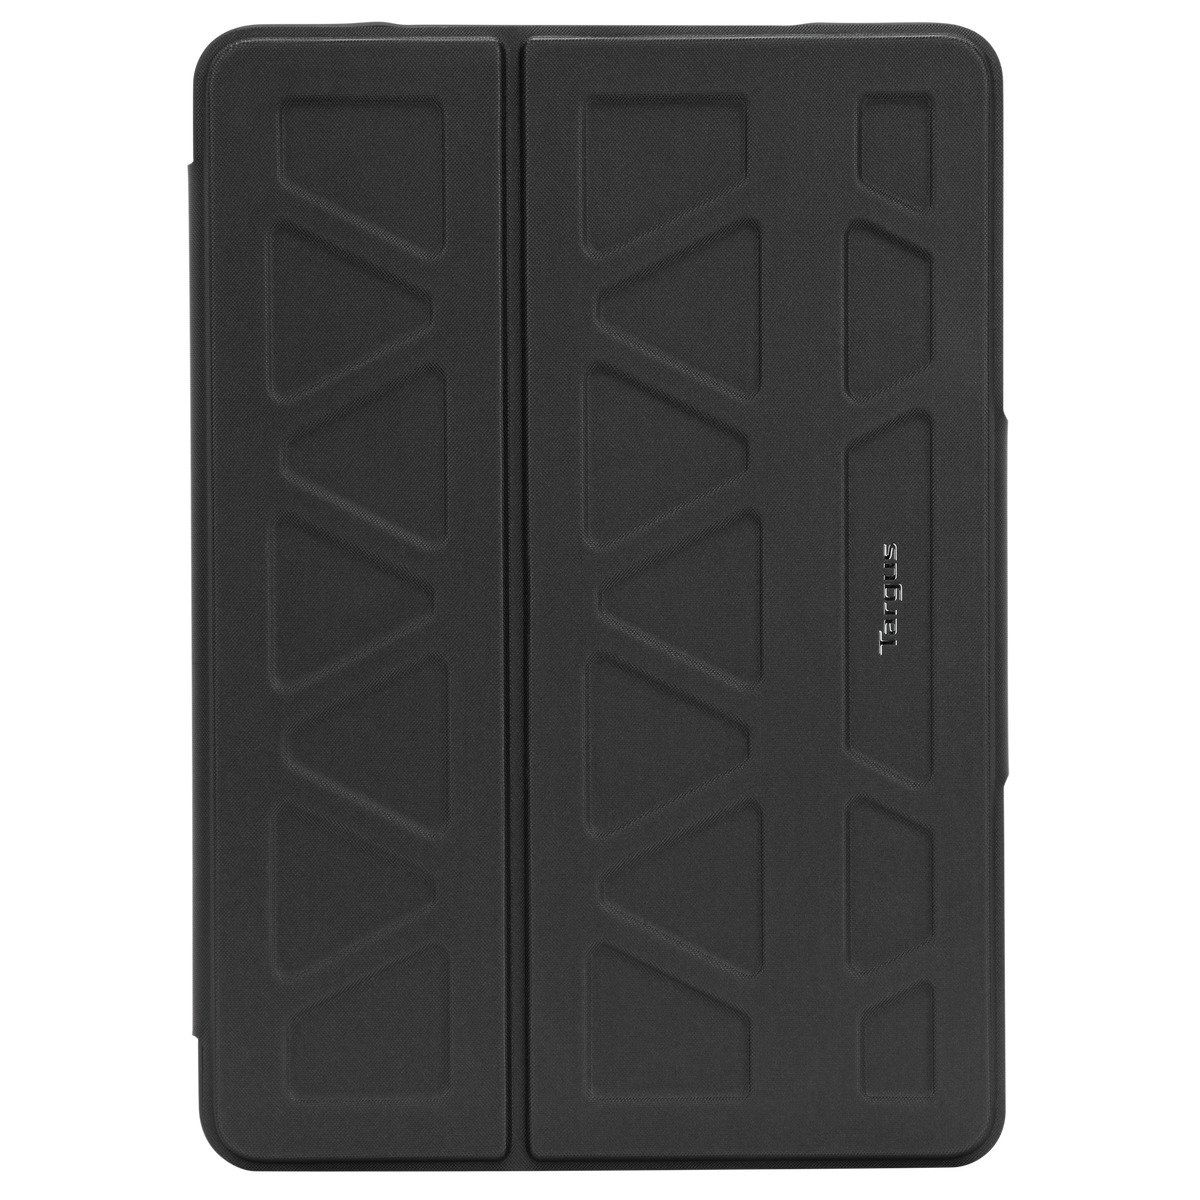  Pro-Tek case for iPad (7th Gen) 10.2-inch  iPad Air 10.5-inch and iPad Pro 10.5-inch Black